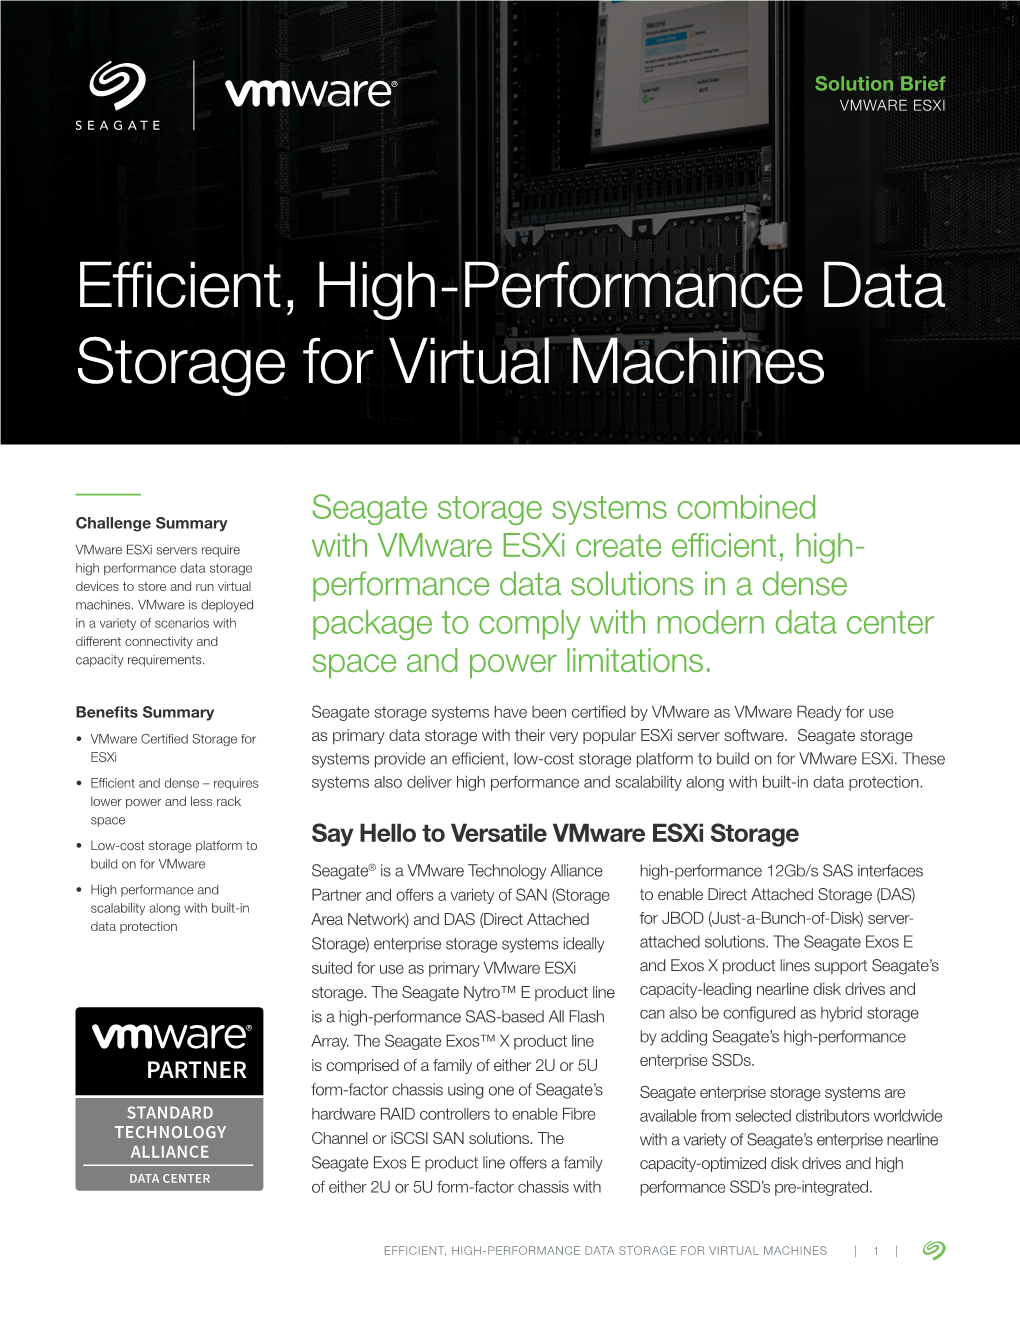 Efficient, High-Performance Data Storage for Virtual Machines